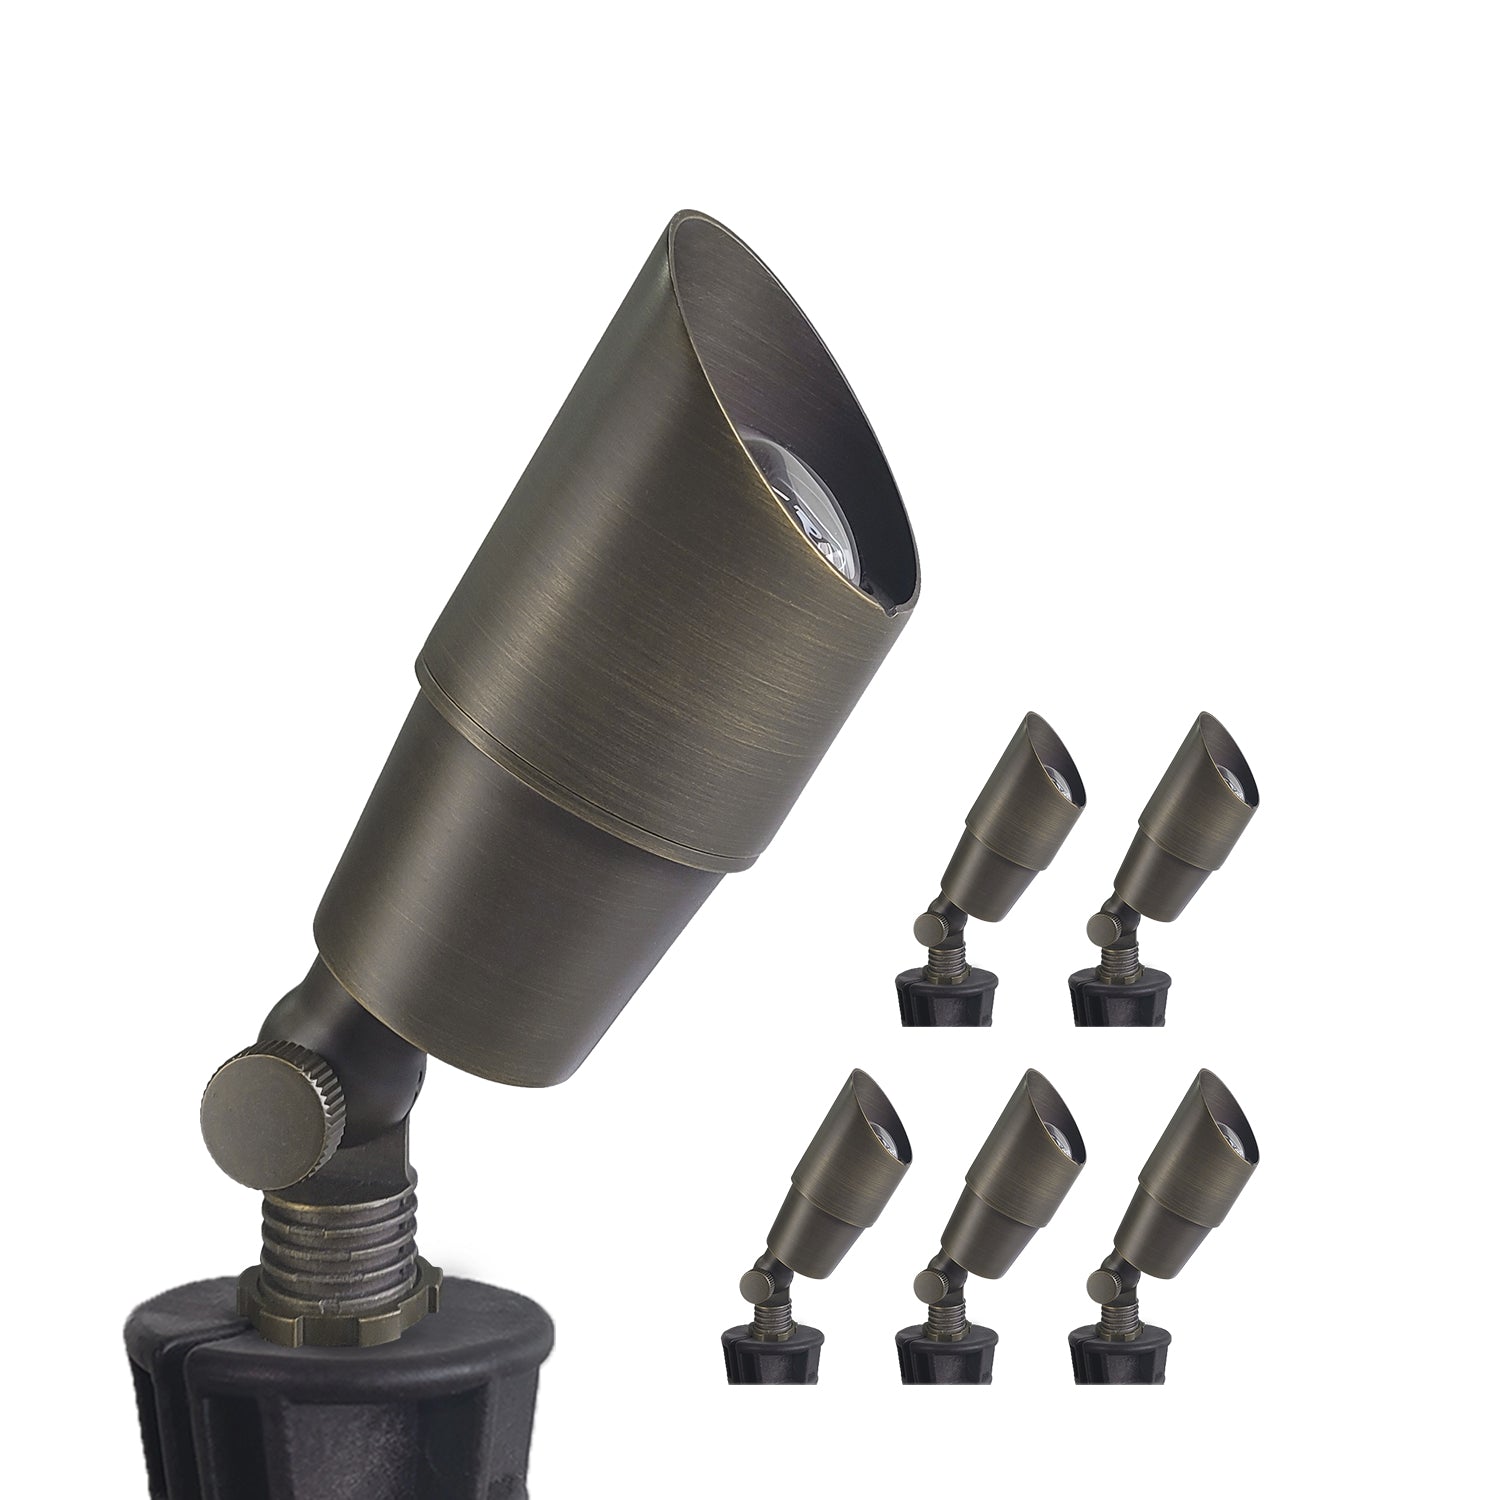 Brass LED outdoor garden decor spotlights with adjustable heads for landscape lighting COA101B